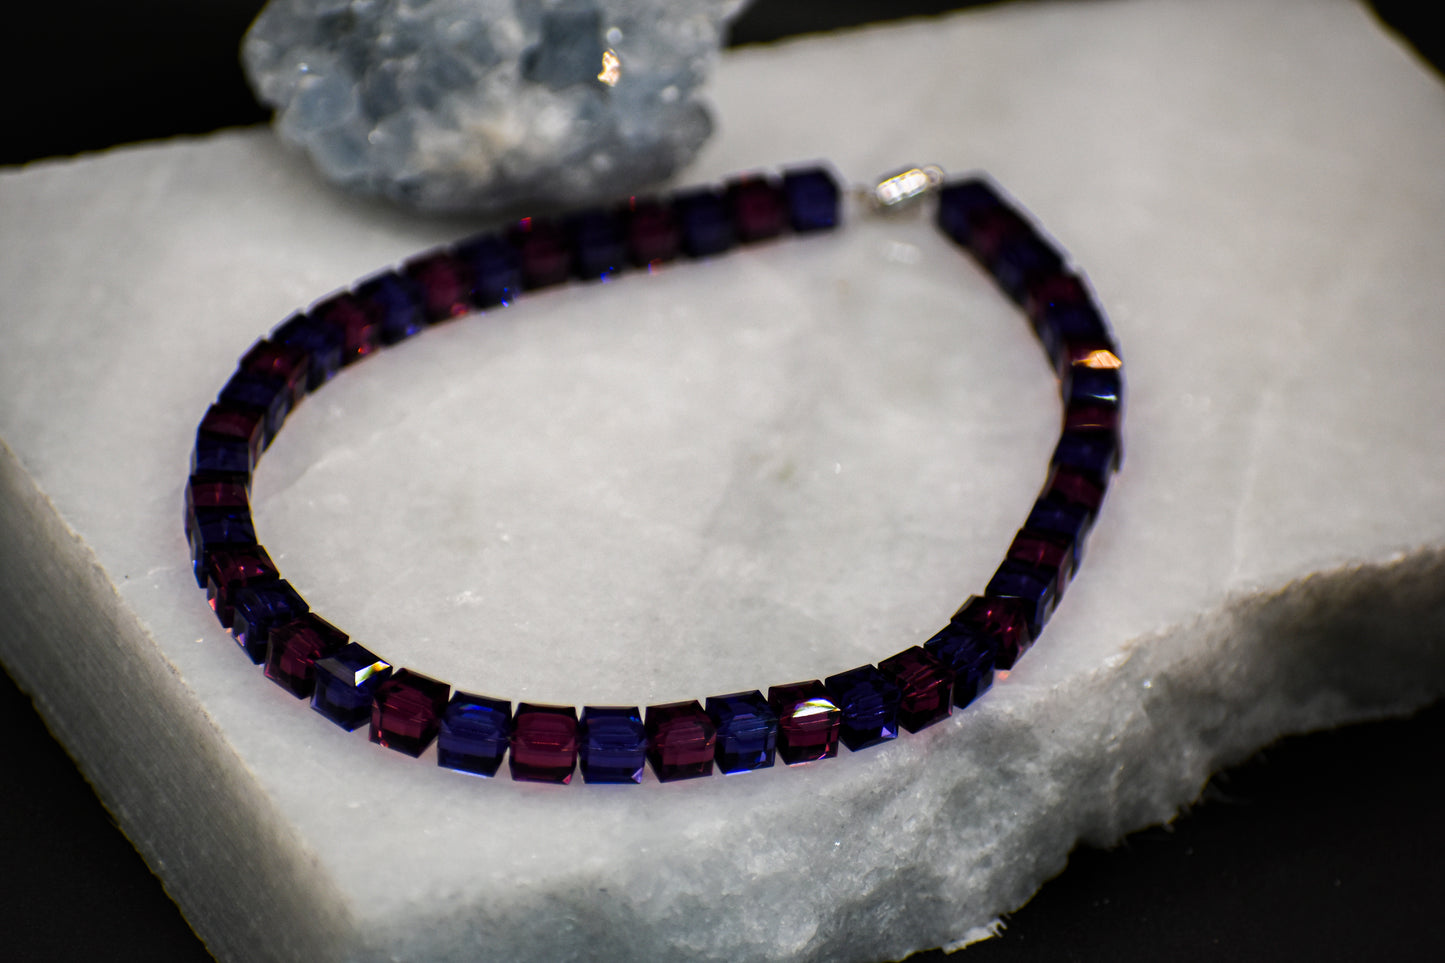 Light Amathyst and Deep Amathyst cubed Swarovski crystal choker necklace